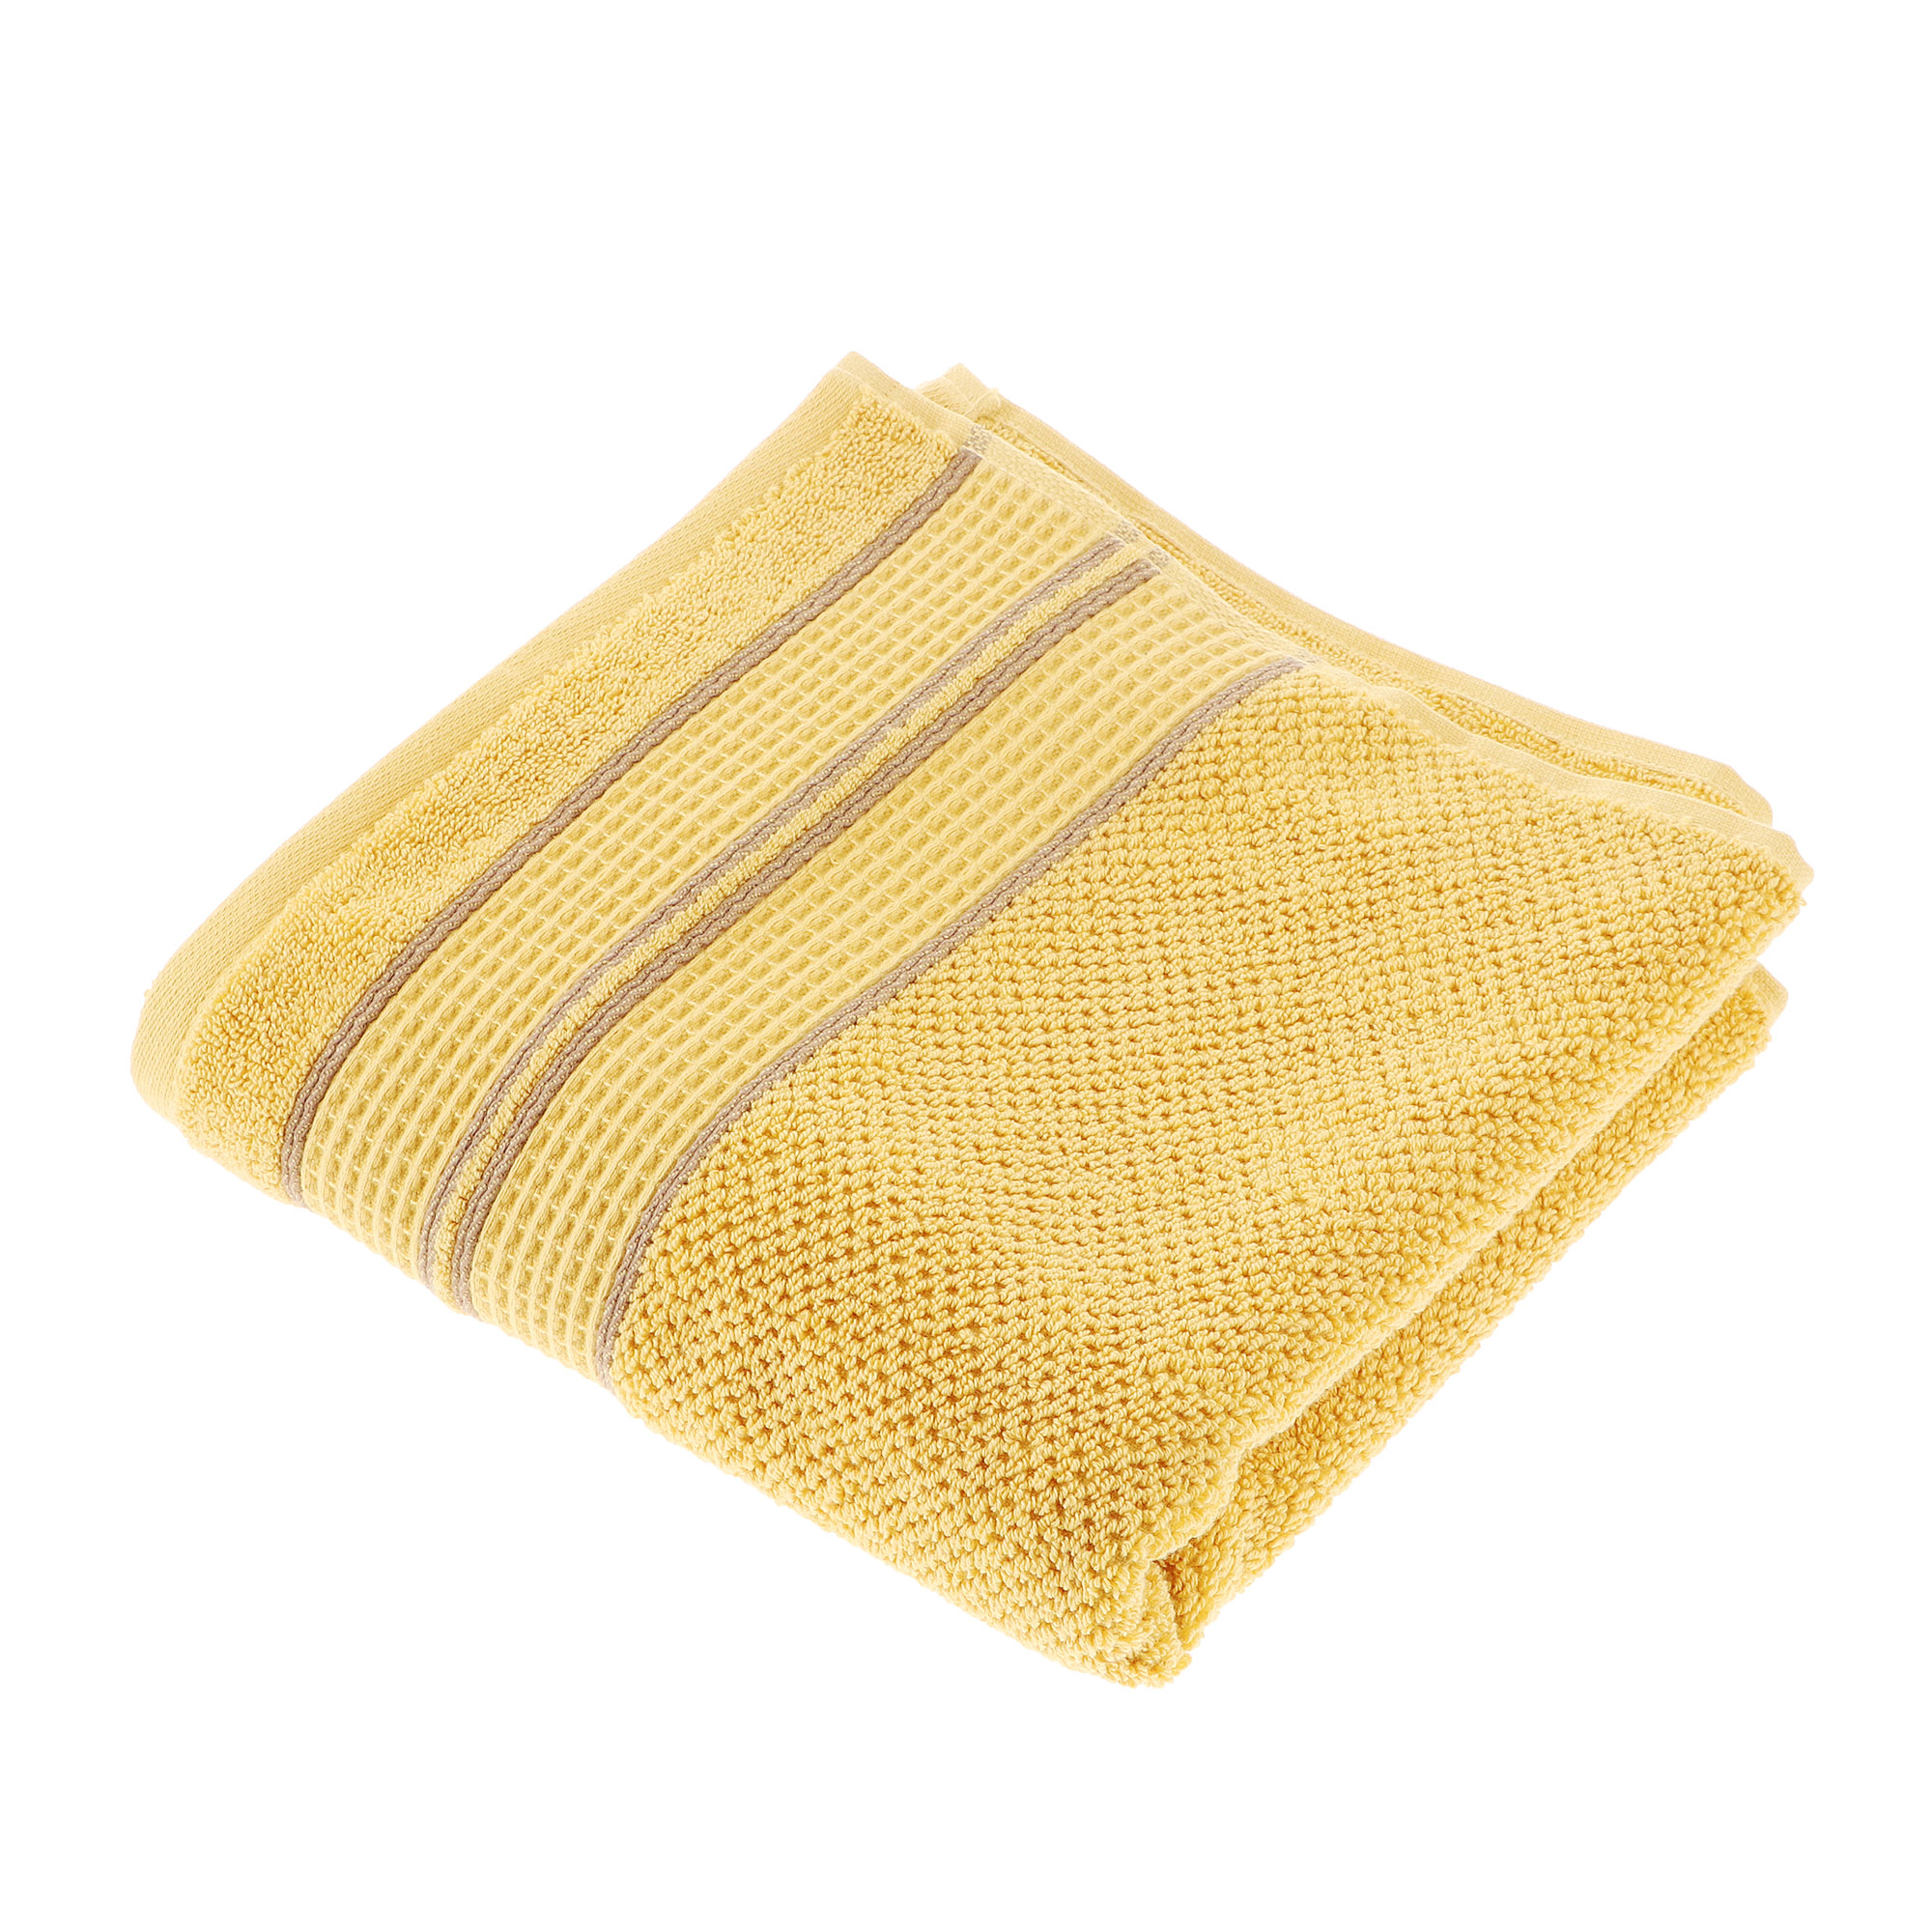 Полотенце махровое Cleanelly пиоппо горчица 100х150 см полотенца italbaby полотенце махровое 100х100